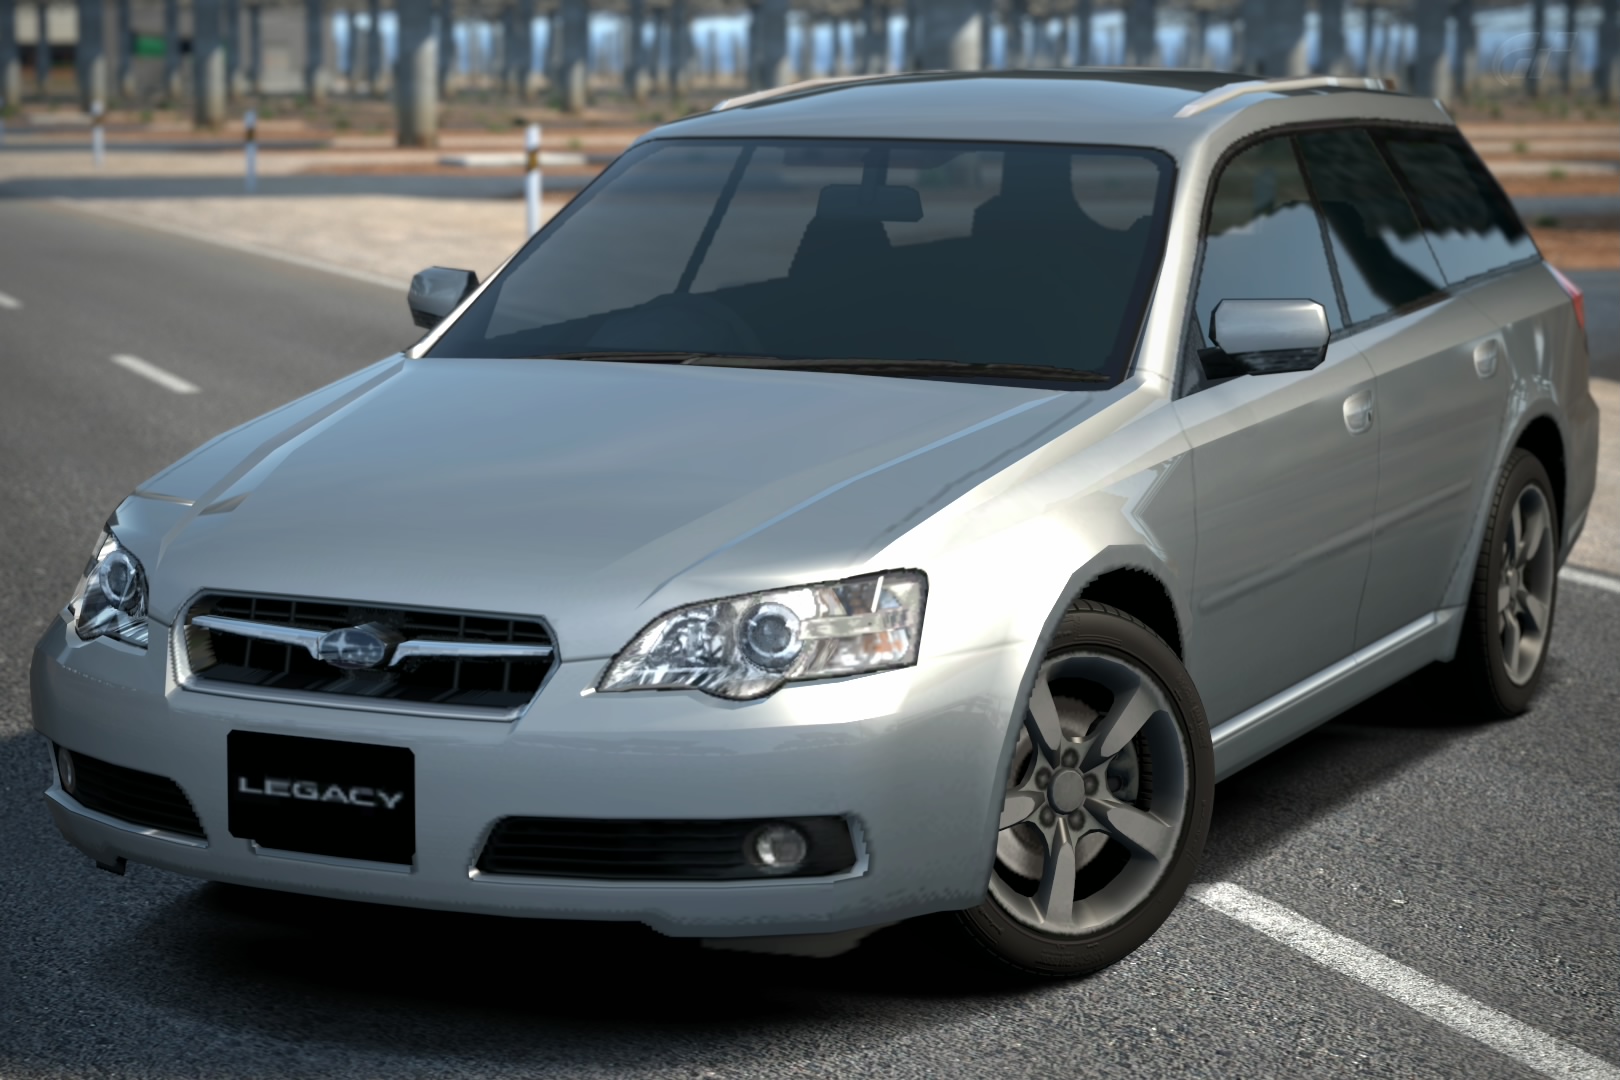 Subaru LEGACY Touring Wagon 3.0R '03 | Gran Turismo Wiki | Fandom